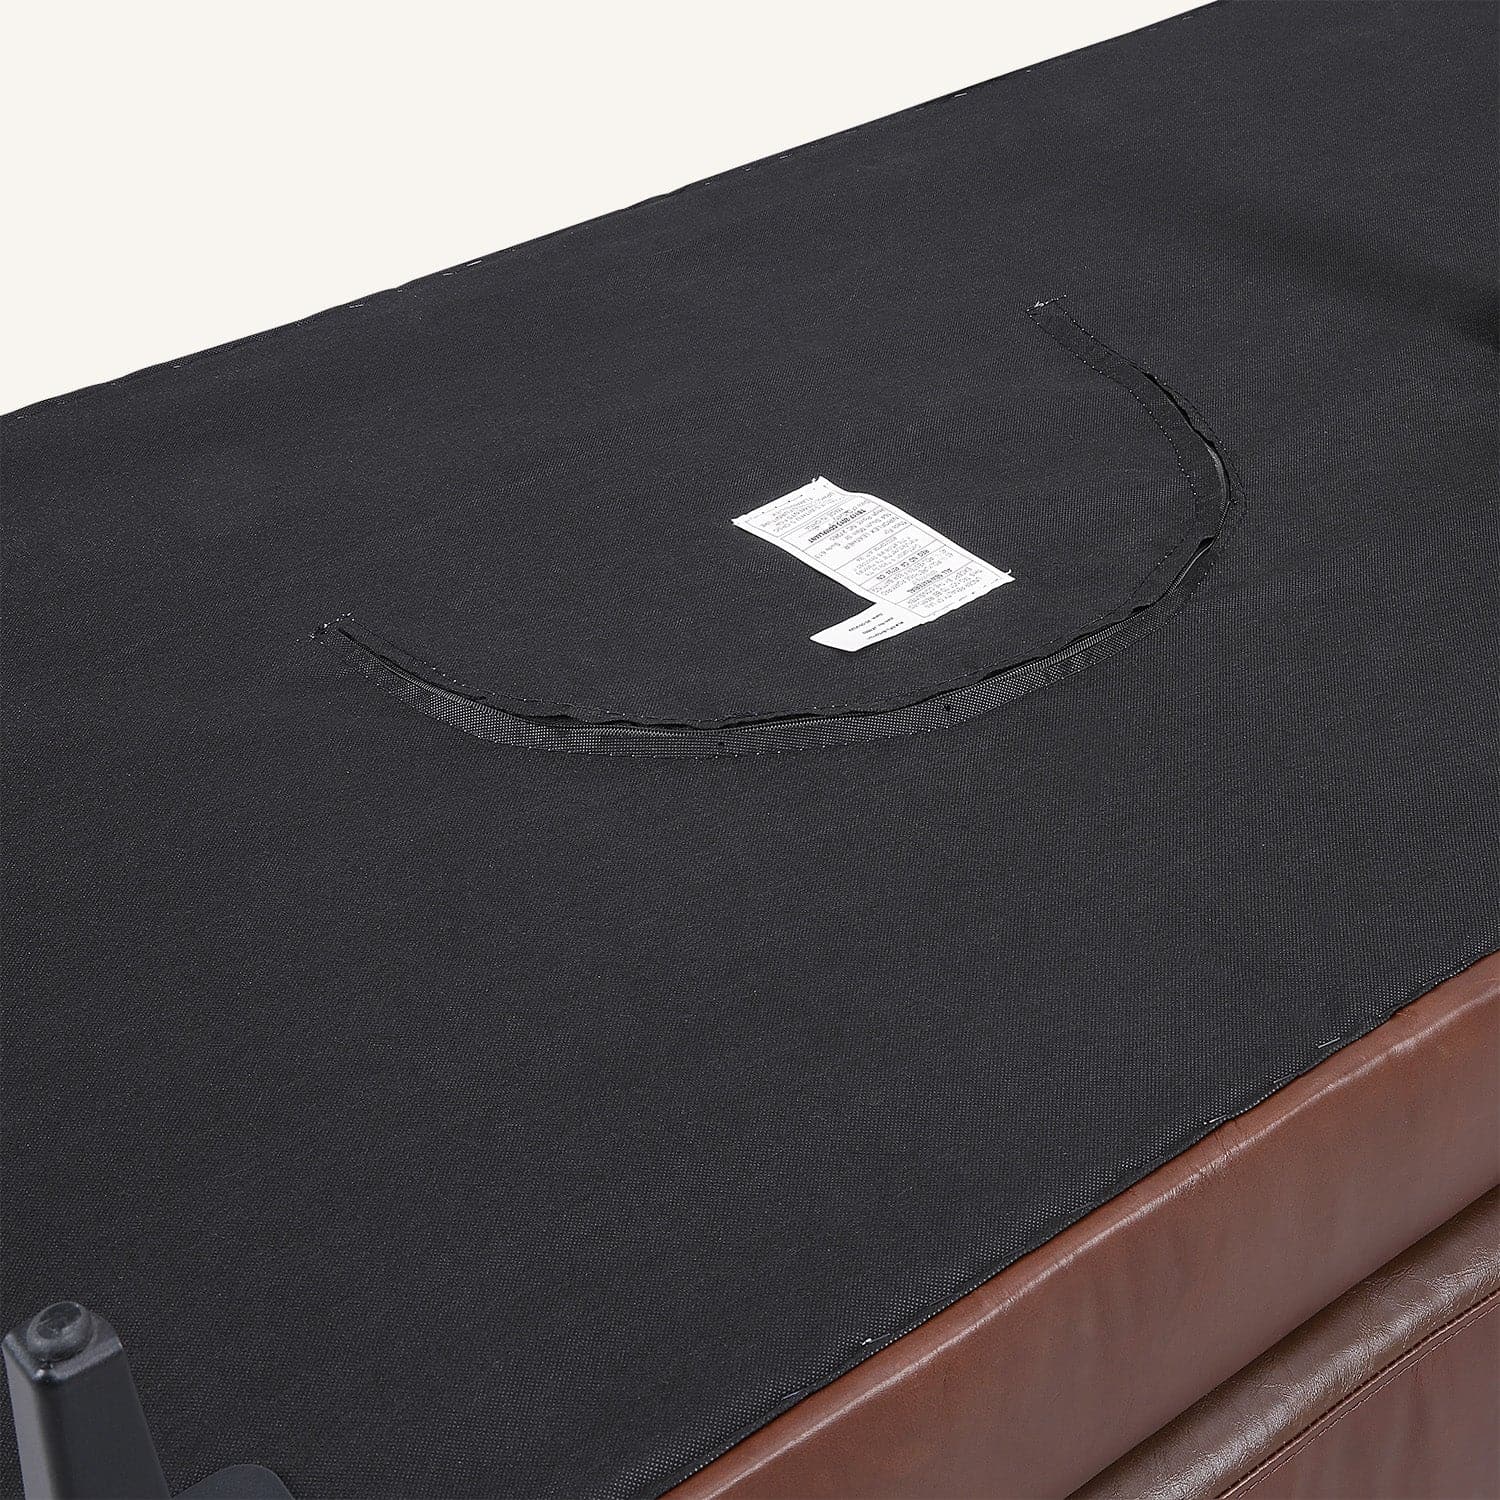 Harvard Chocolate Brown Oil Wax Leather 3-Seater Sofa with Ottoman